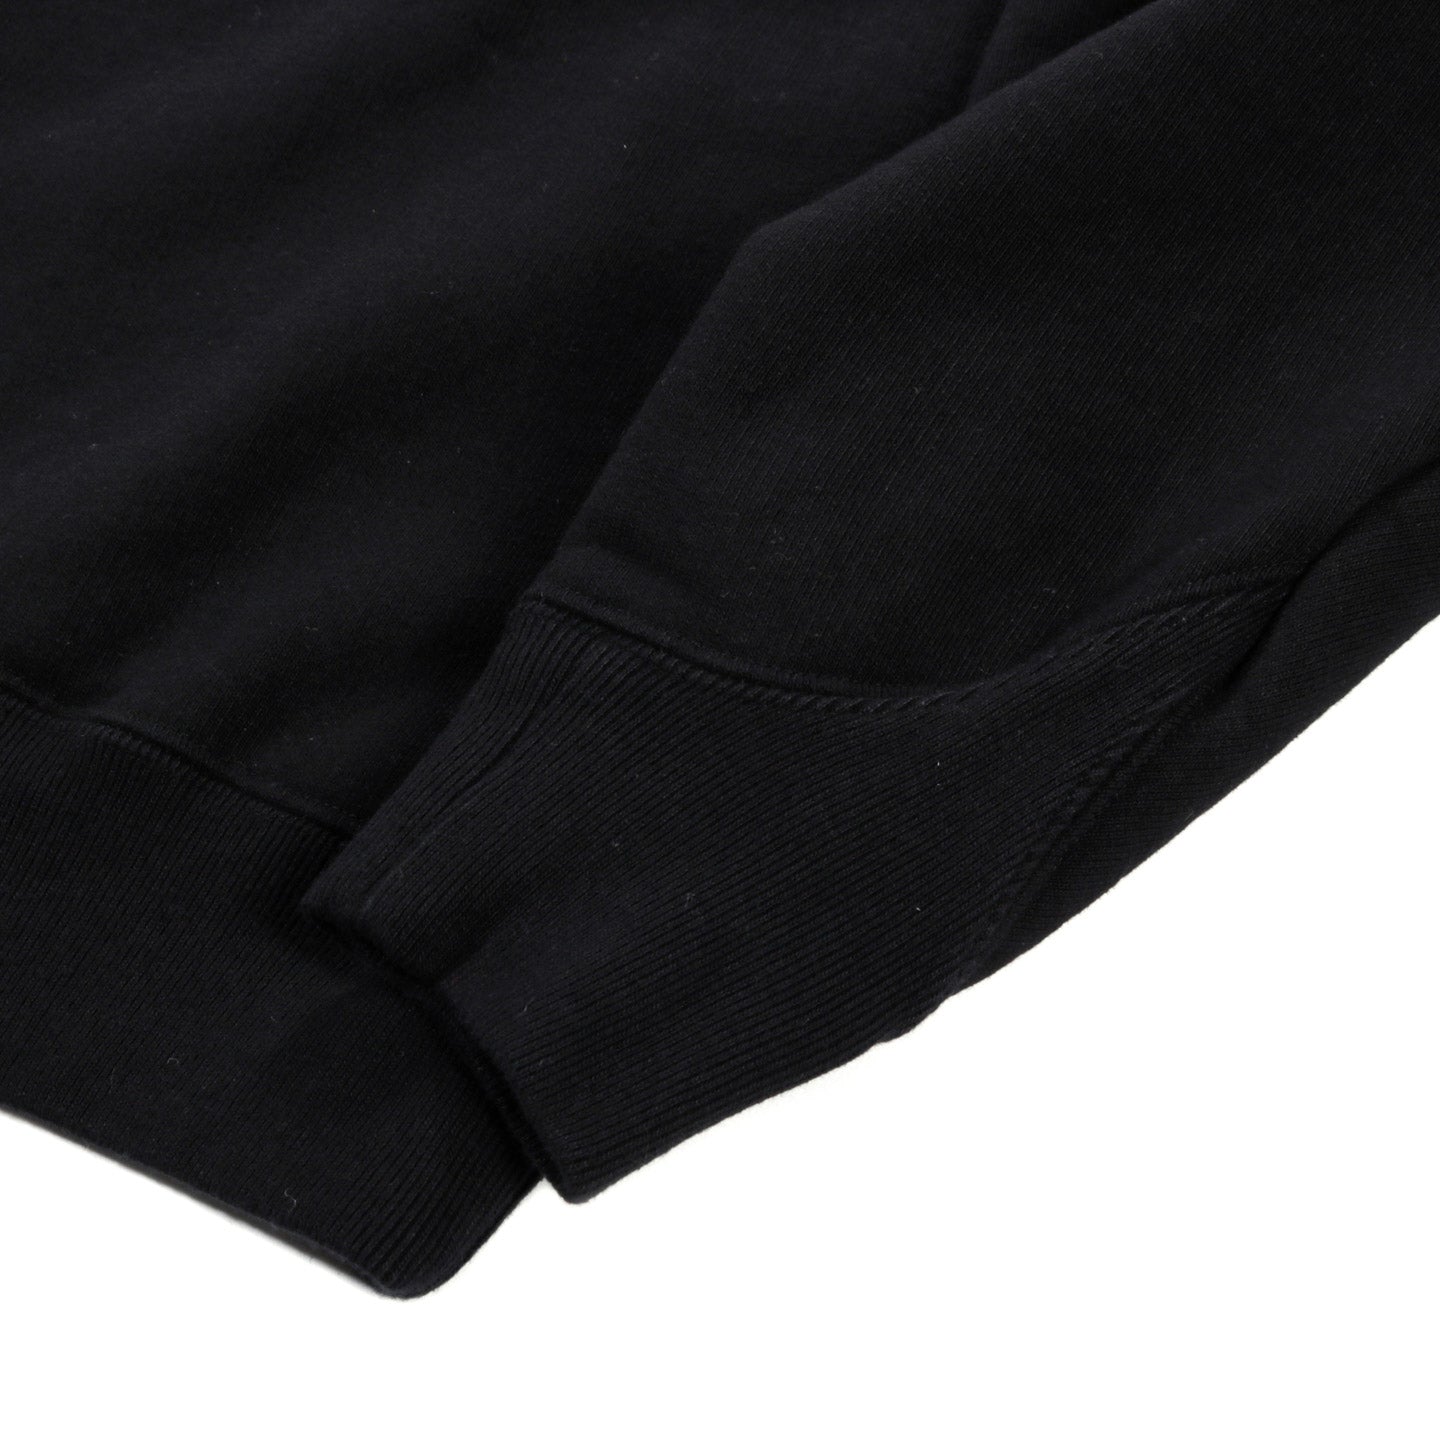 NEIGHBORHOOD KATHARINE HAMNETT LOGO CREW SWEATSHIRT BLACK | TODAY CLOTHING